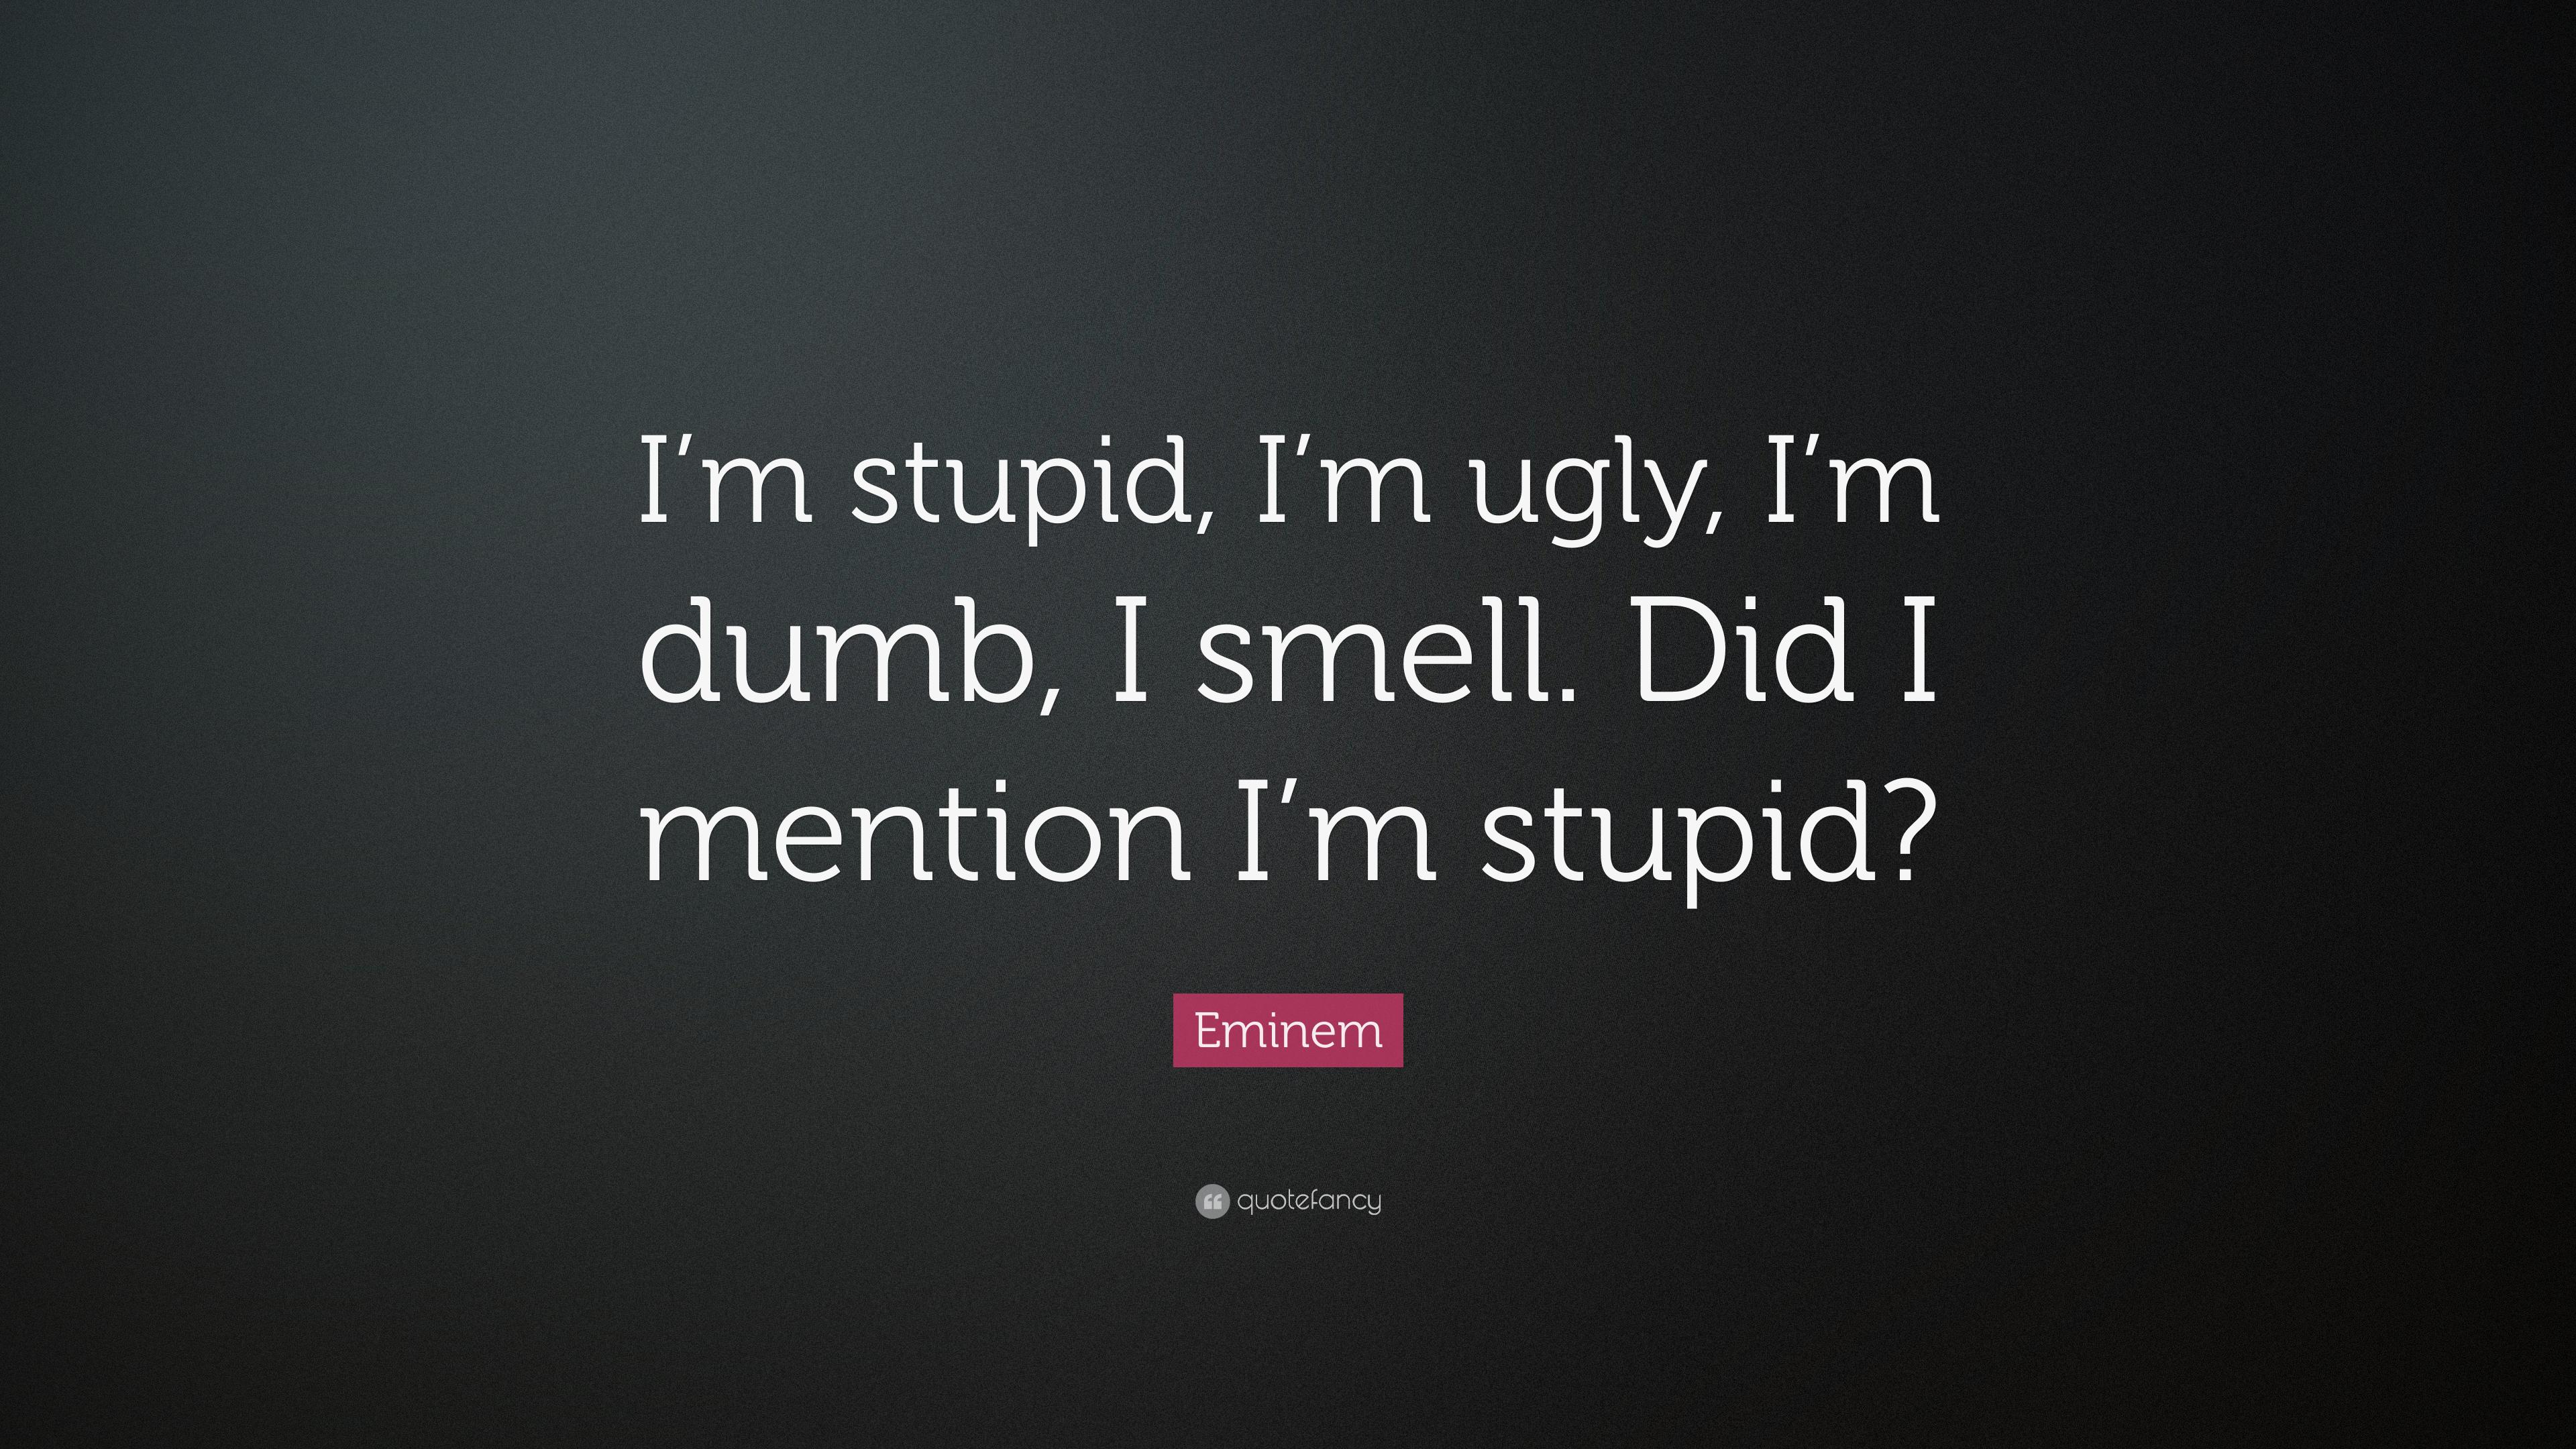 Eminem Quote: “I'm stupid, I'm ugly, I'm dumb, I smell. Did I mention